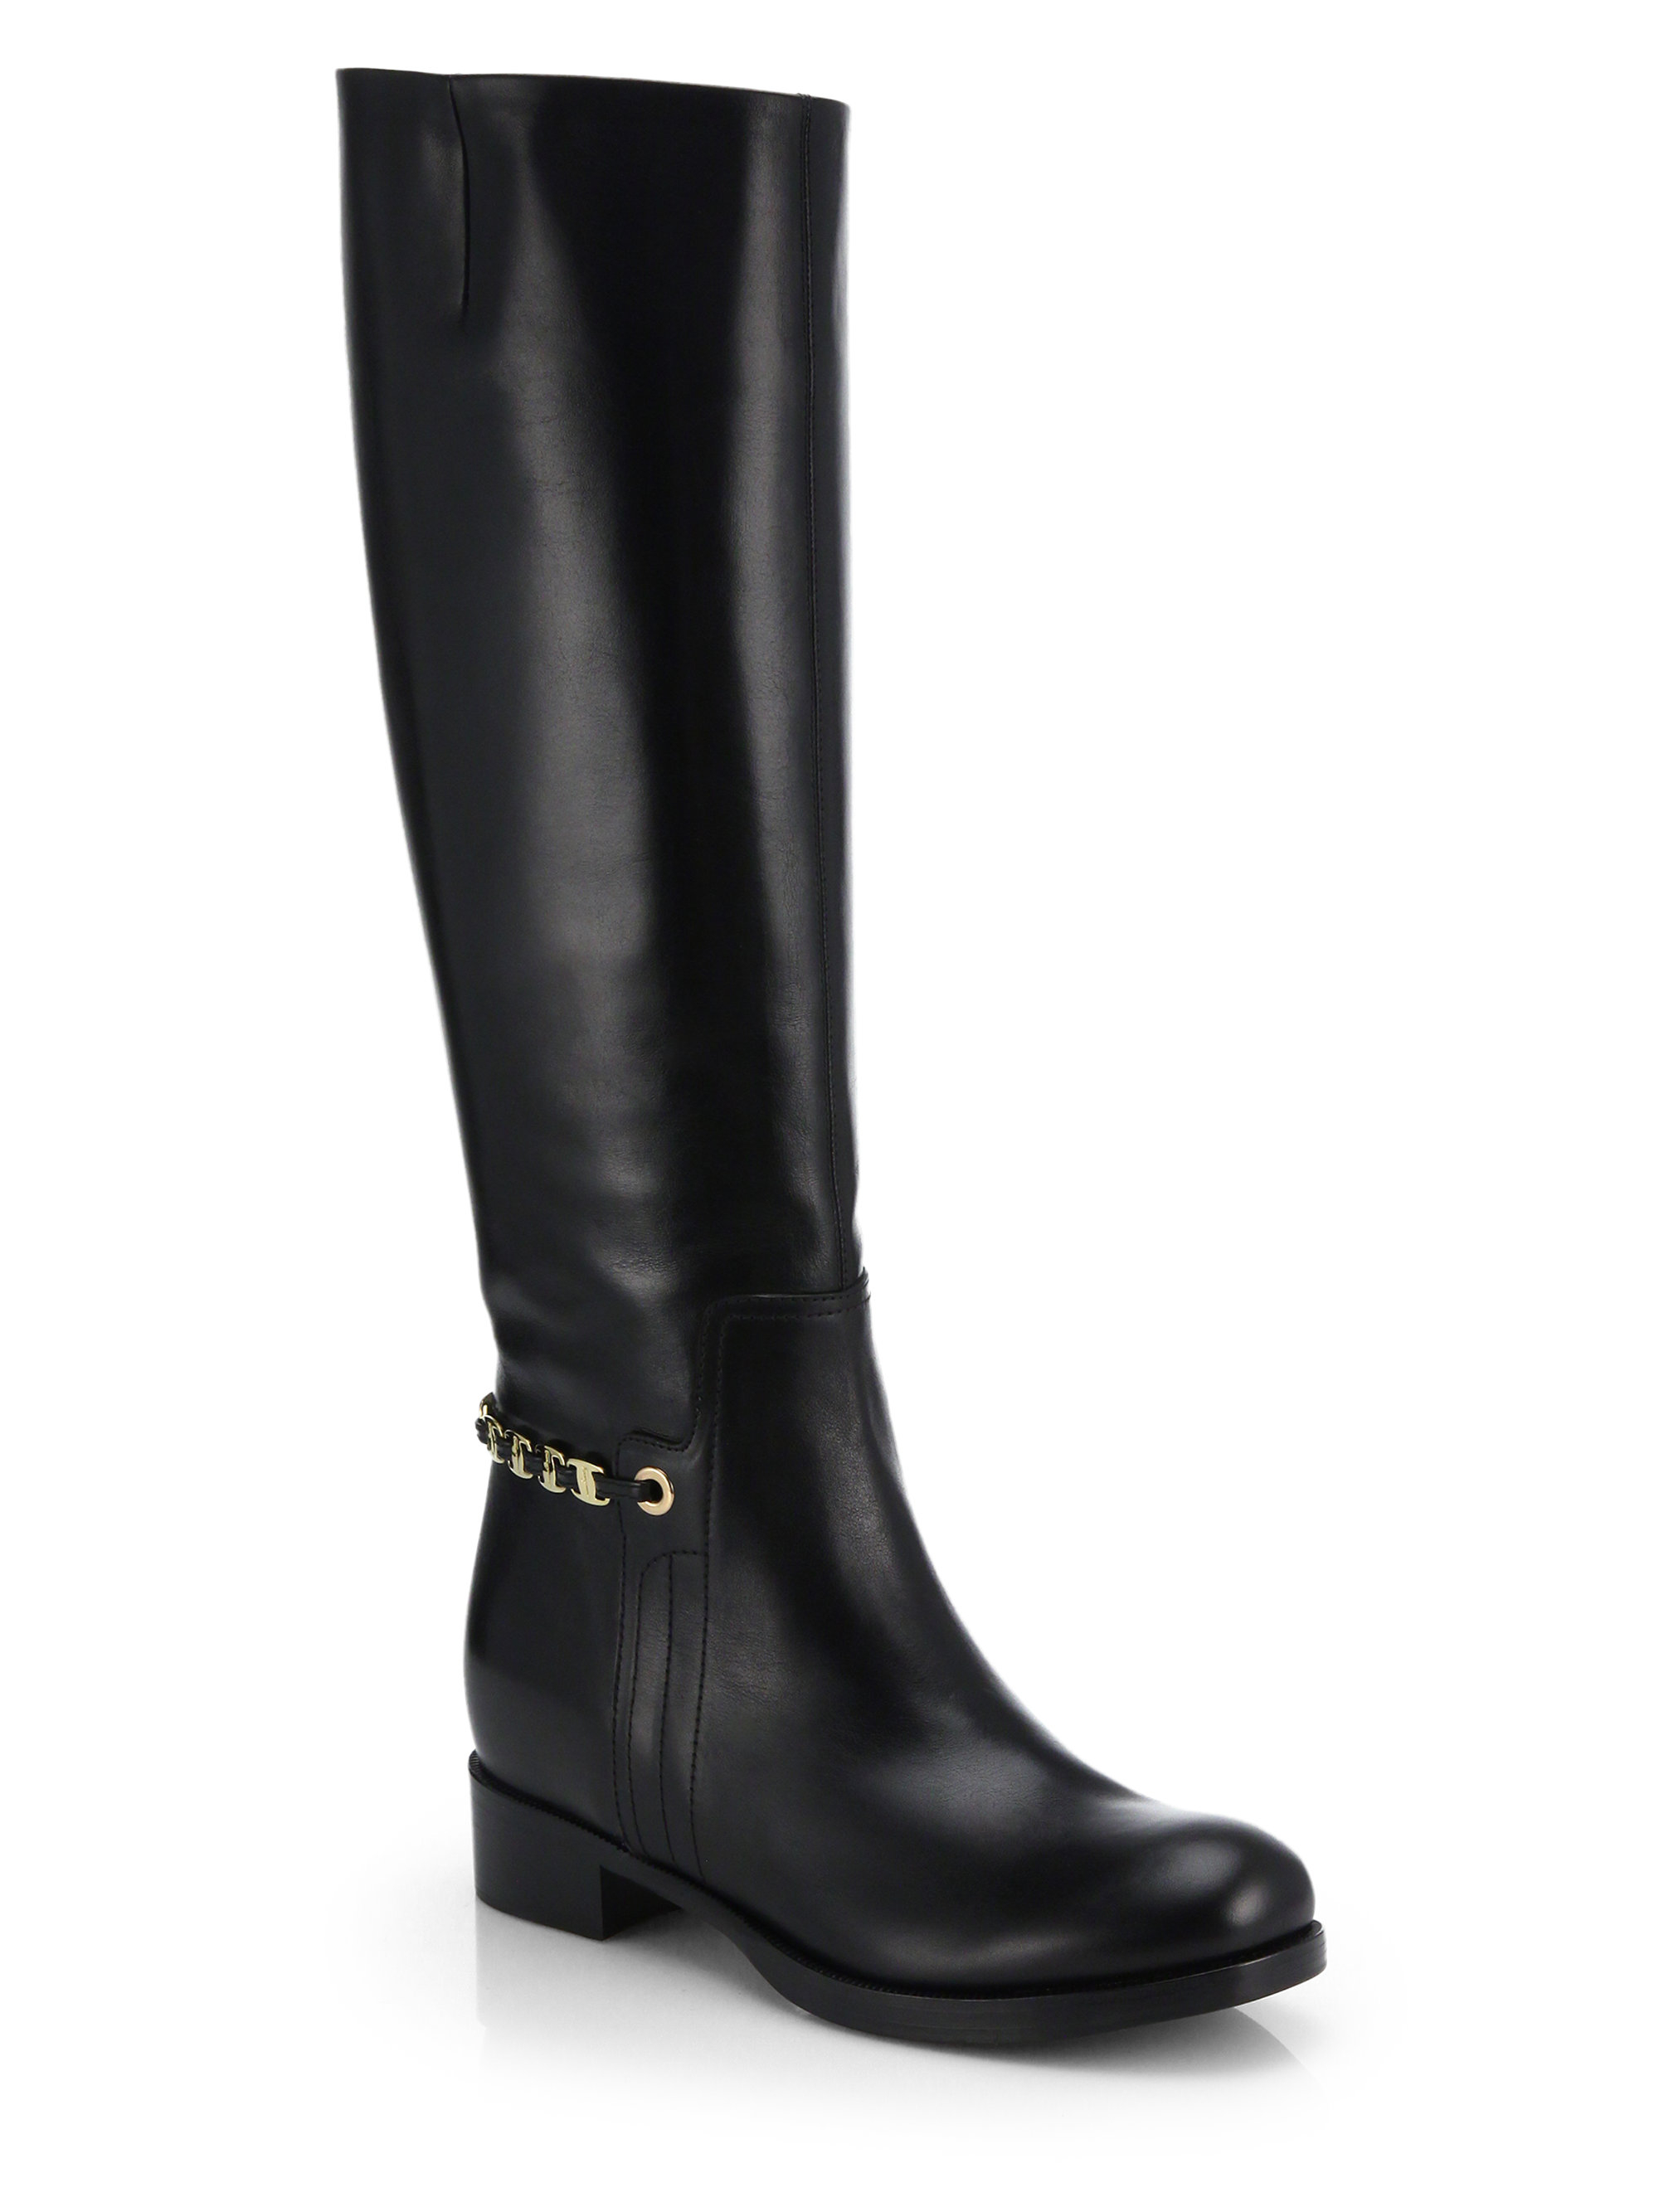 Lyst - Ferragamo Nando Chain-Trimmed Leather Boots in Black